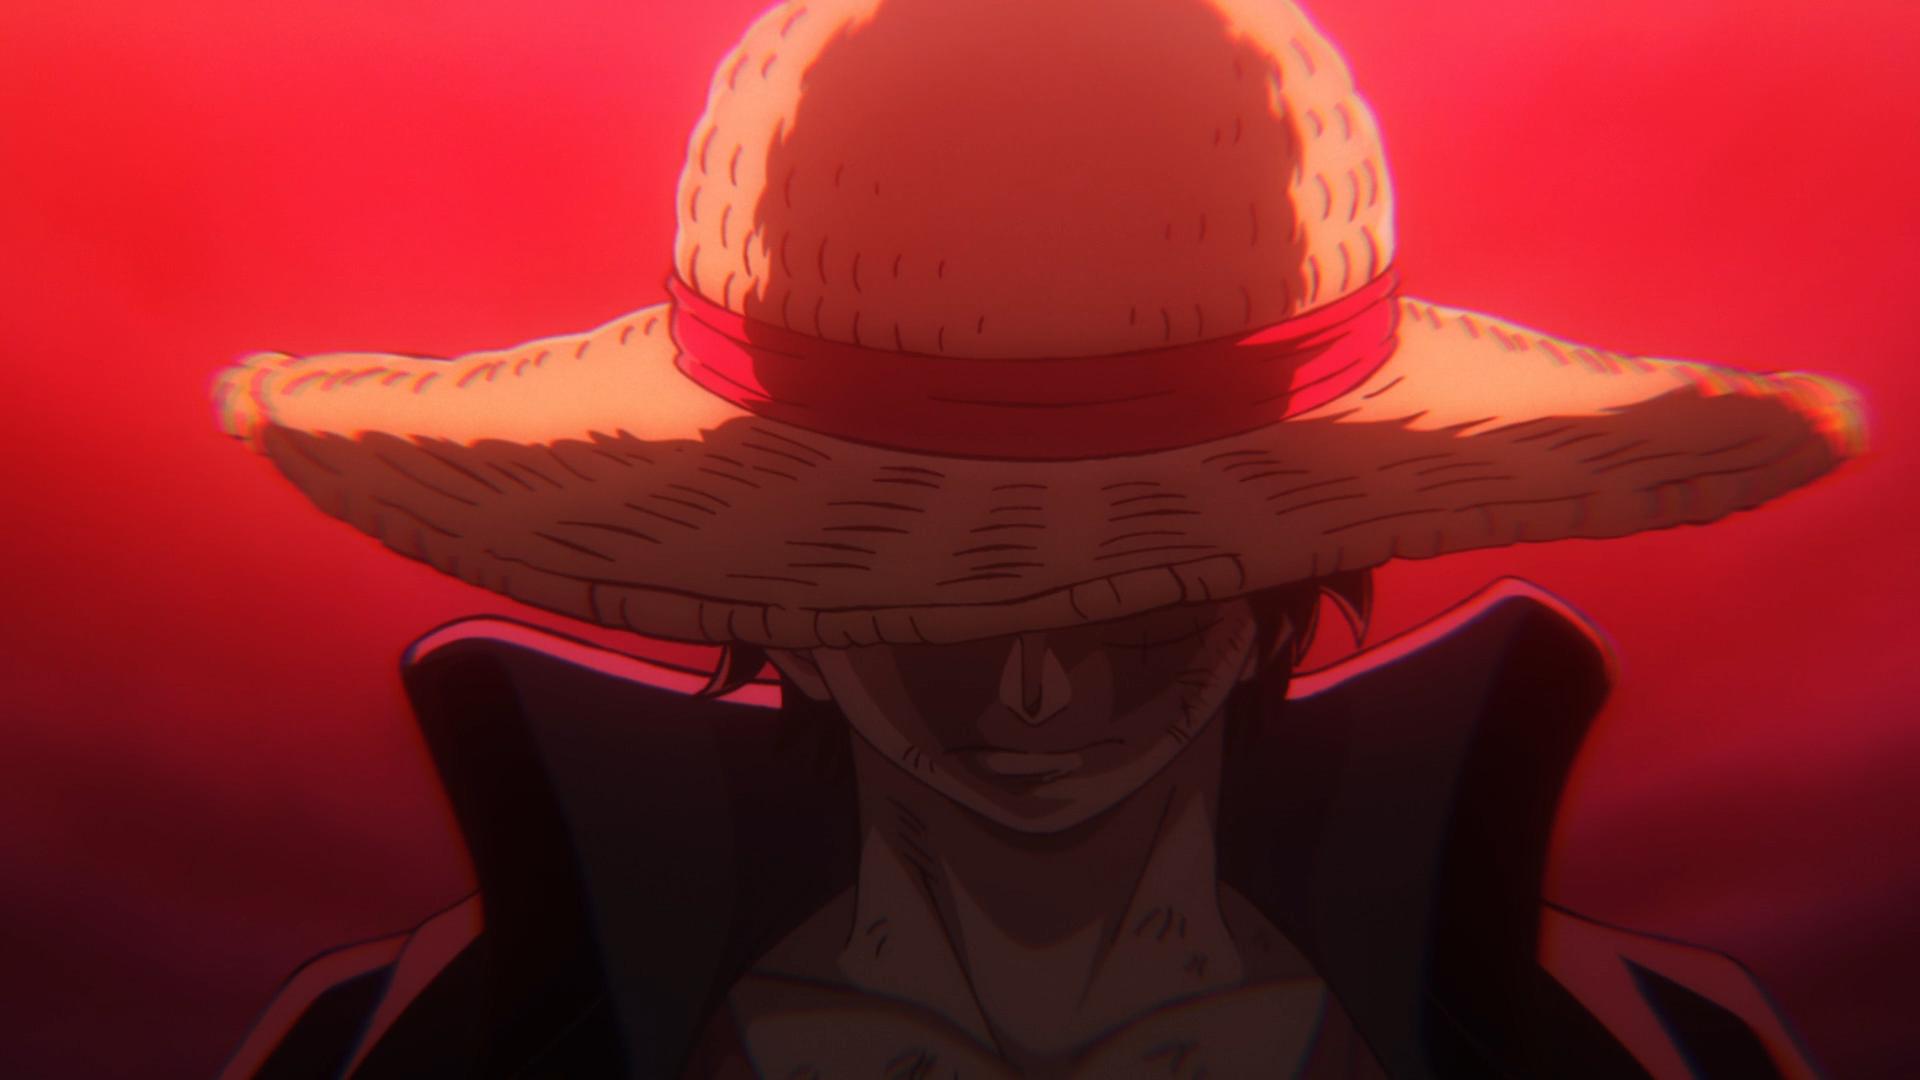 One Piece Episódio 1054 - Anime HD - Animes Online Gratis!